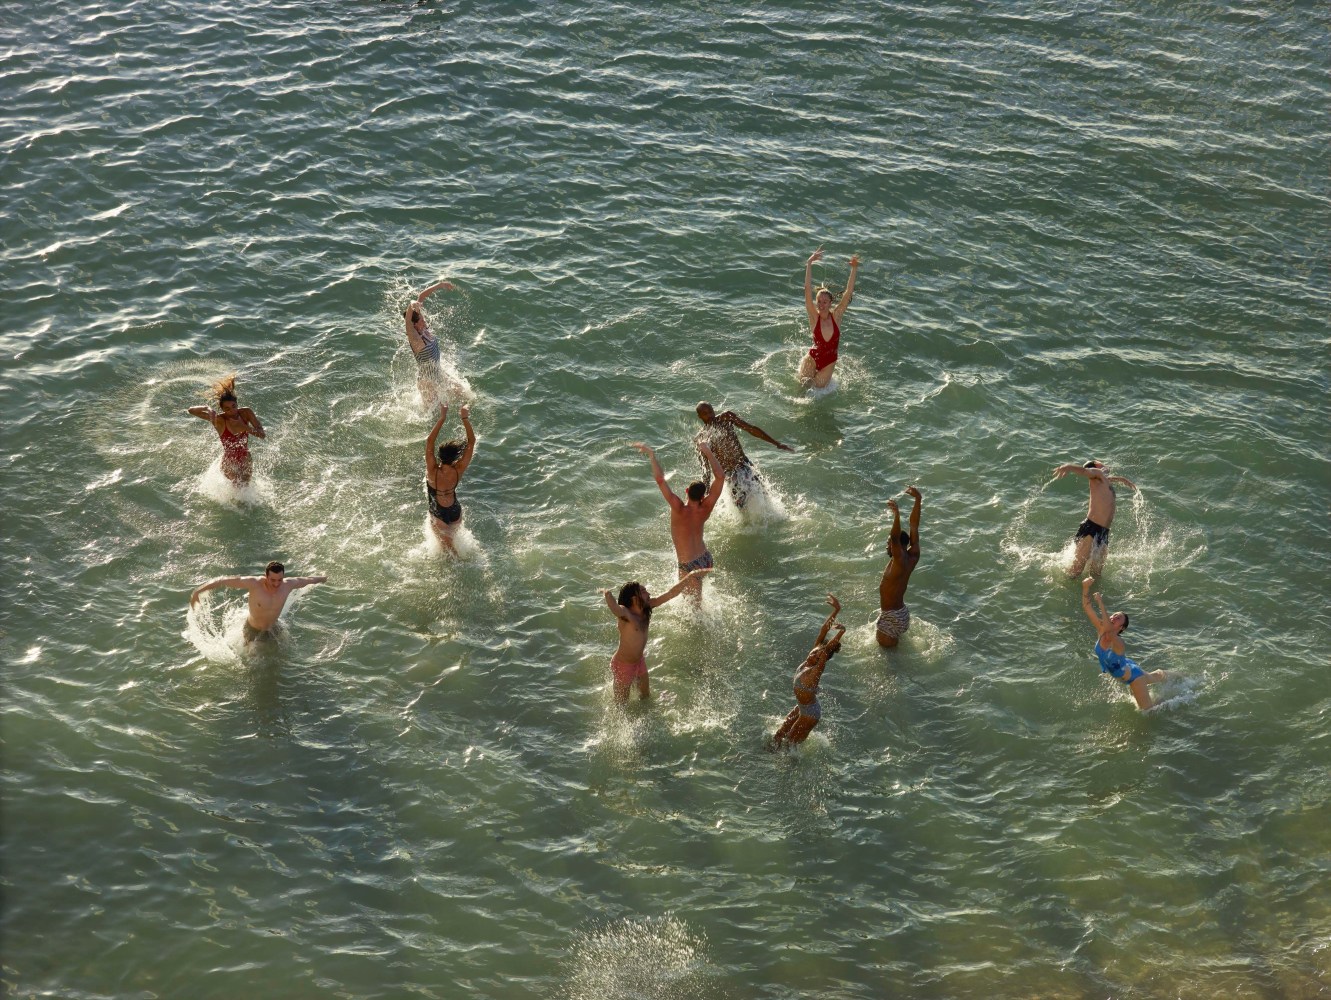 a group of joyful dancers in the ocean